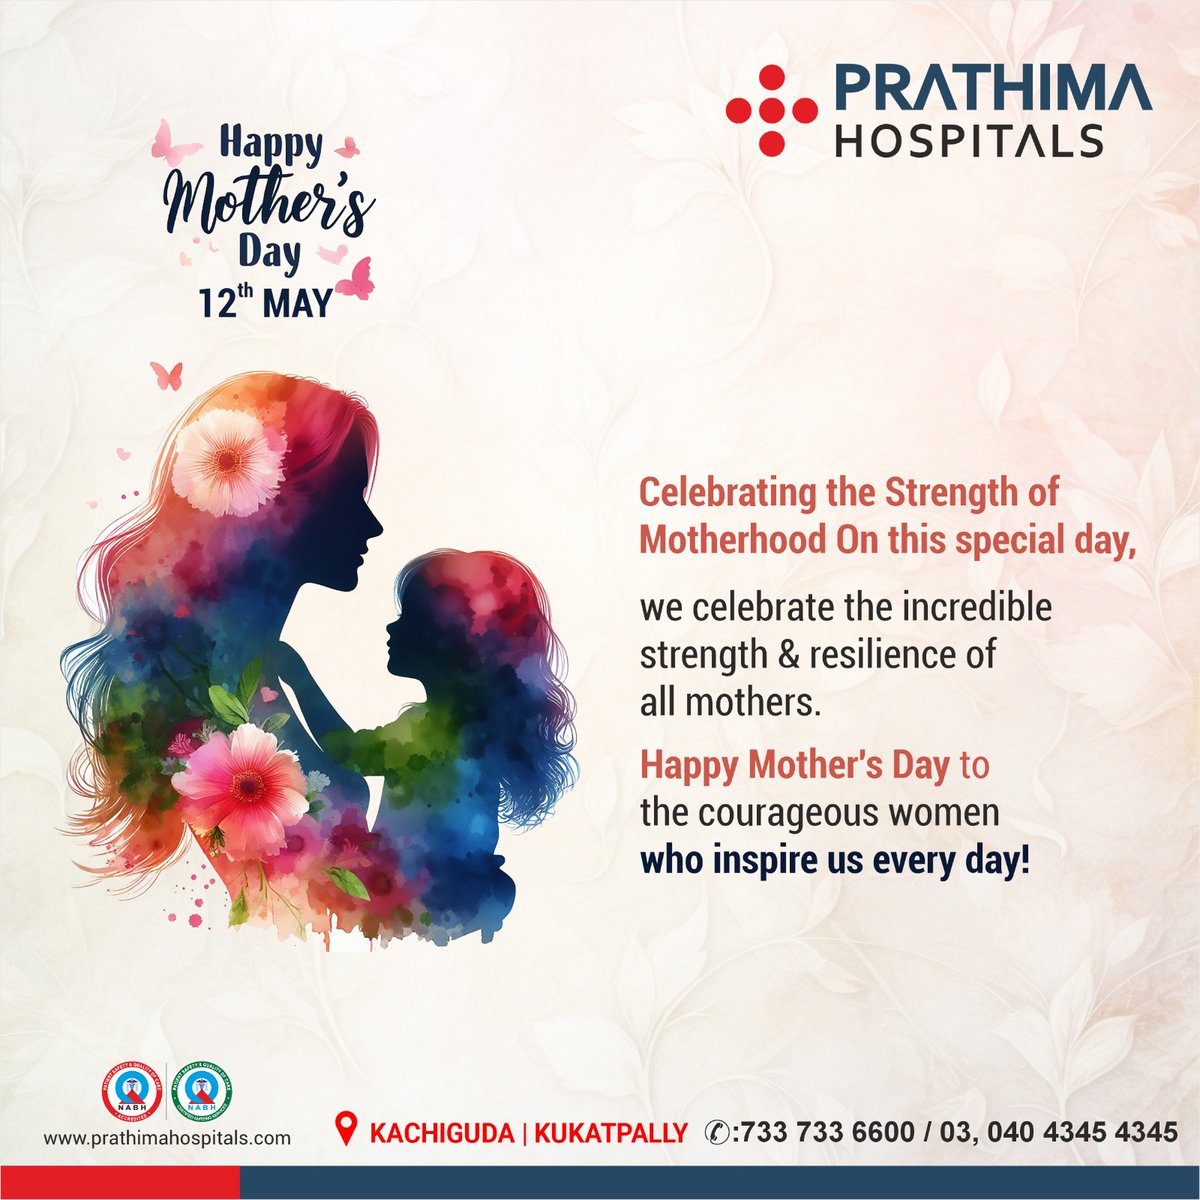 𝐇𝐚𝐩𝐩𝐲 𝐌𝐨𝐭𝐡𝐞𝐫'𝐬 𝐃𝐚𝐲!

we celebrate the incredible strength & resilience of all mothers.

#MothersDay #MomLove #Motherhood #BestMomEver #ThankYouMom #MomAndMe #CelebratingMom #MotherlyLove #FamilyLove #MomLife #MomsAreHeroes #prathimahospitals #prathima #PH